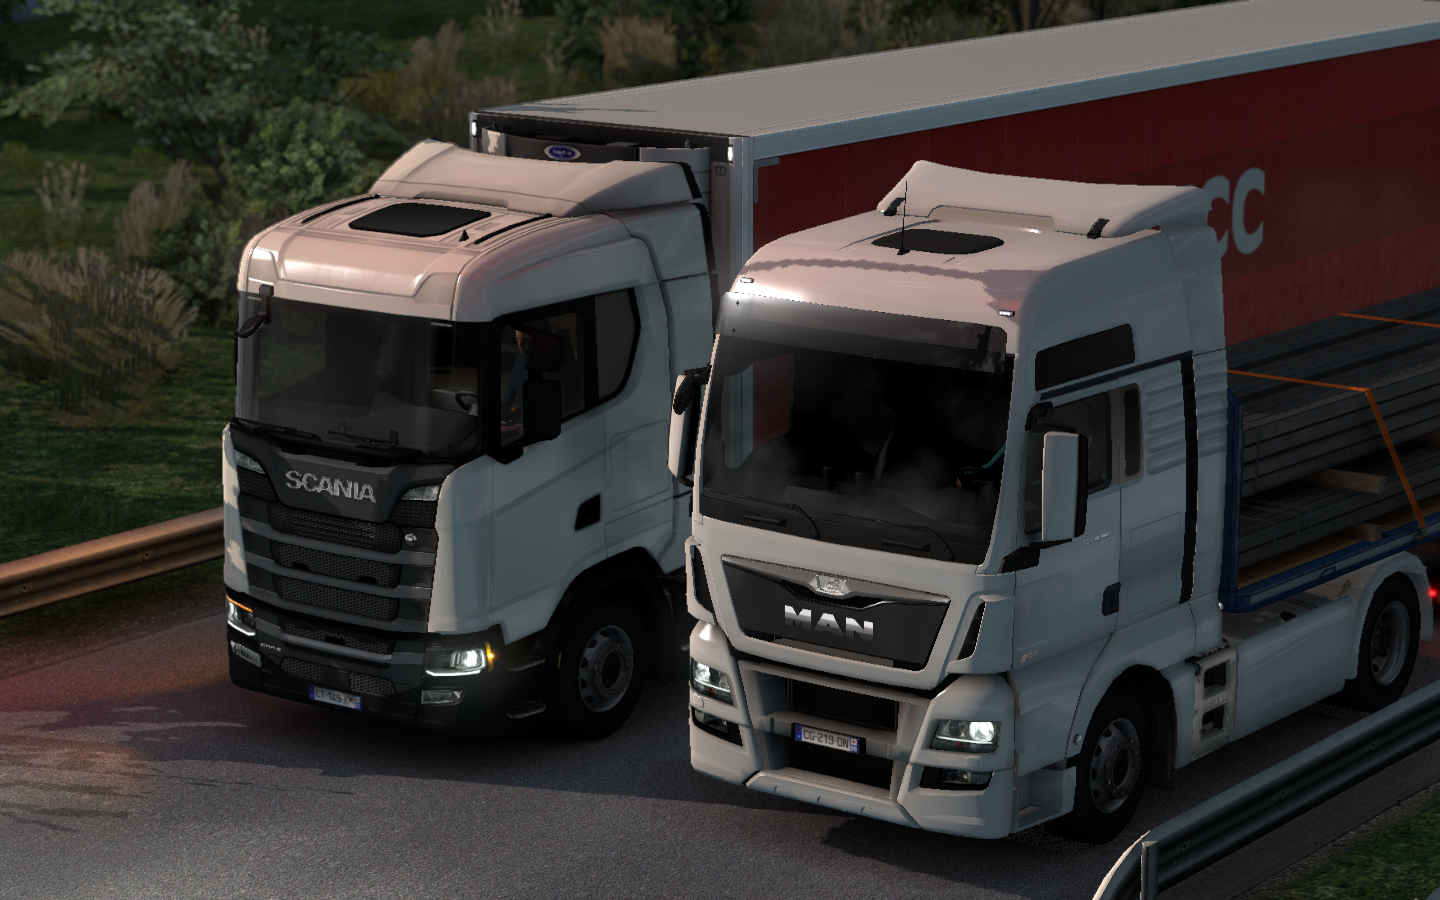 General 1440x900 Scania truck Euro Truck Simulator 2 video games PC gaming white trucks (vehicle) screen shot